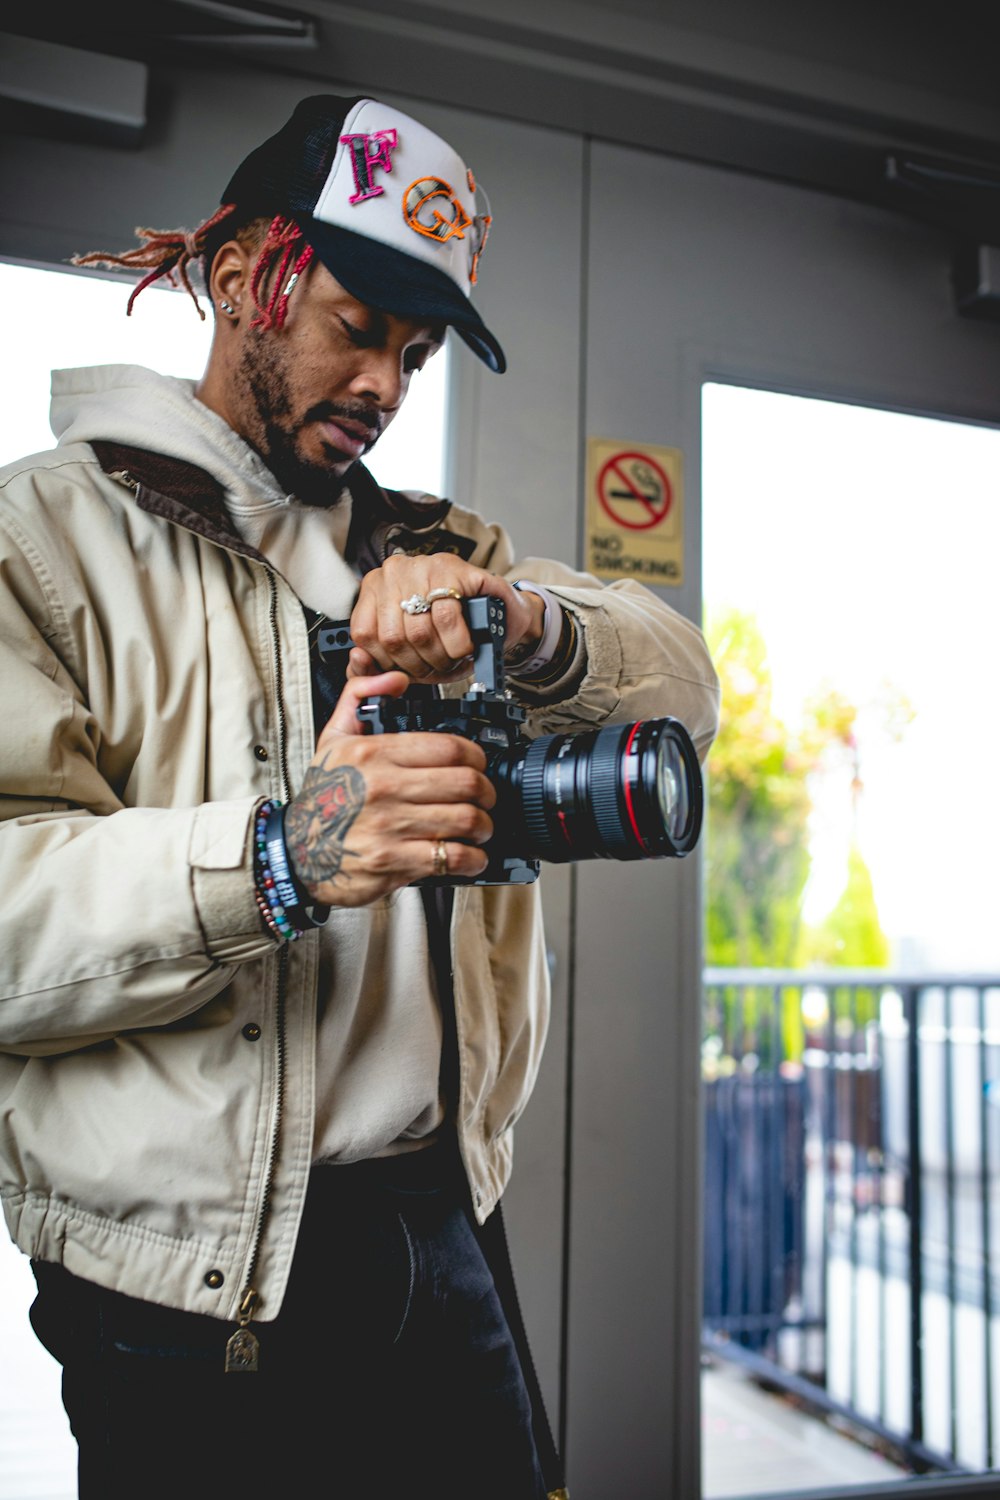 a man with dreadlocks holding a camera